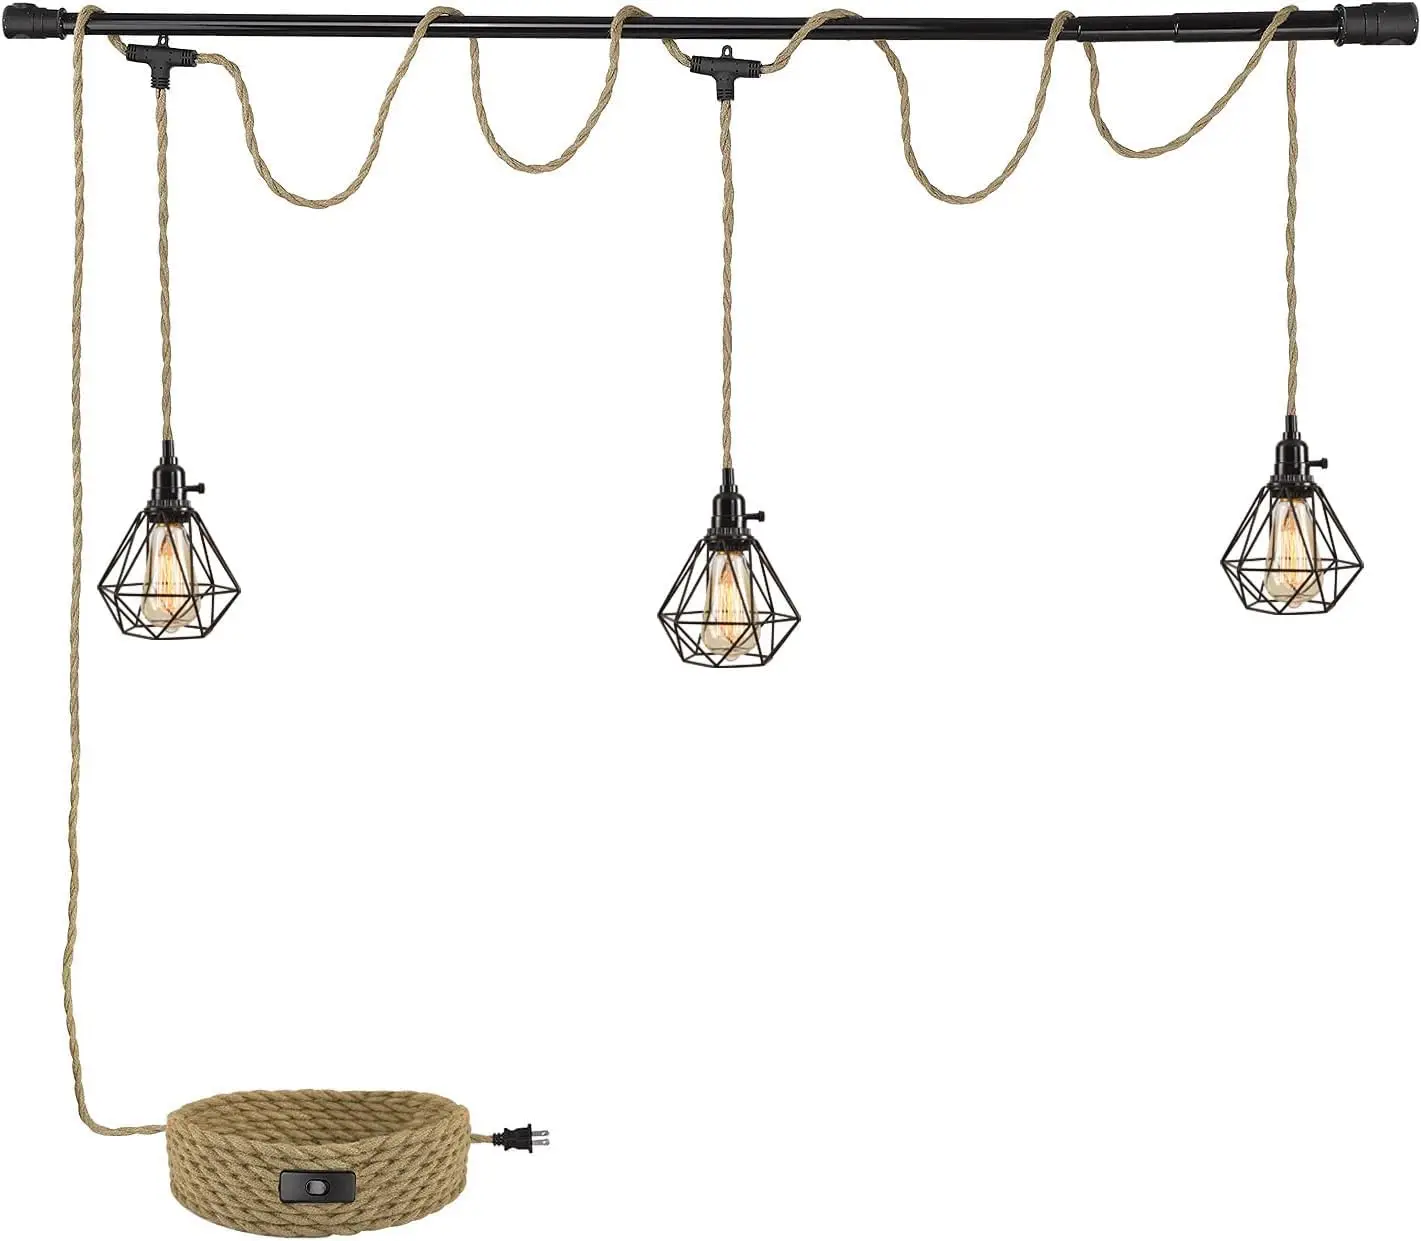 

3-Light Hanging Light with Plug in Cord,Pendant Light 22ft Hemp Rope Pendant Lighting Vintage Metal Cage Hang Lamp Base Fixtures